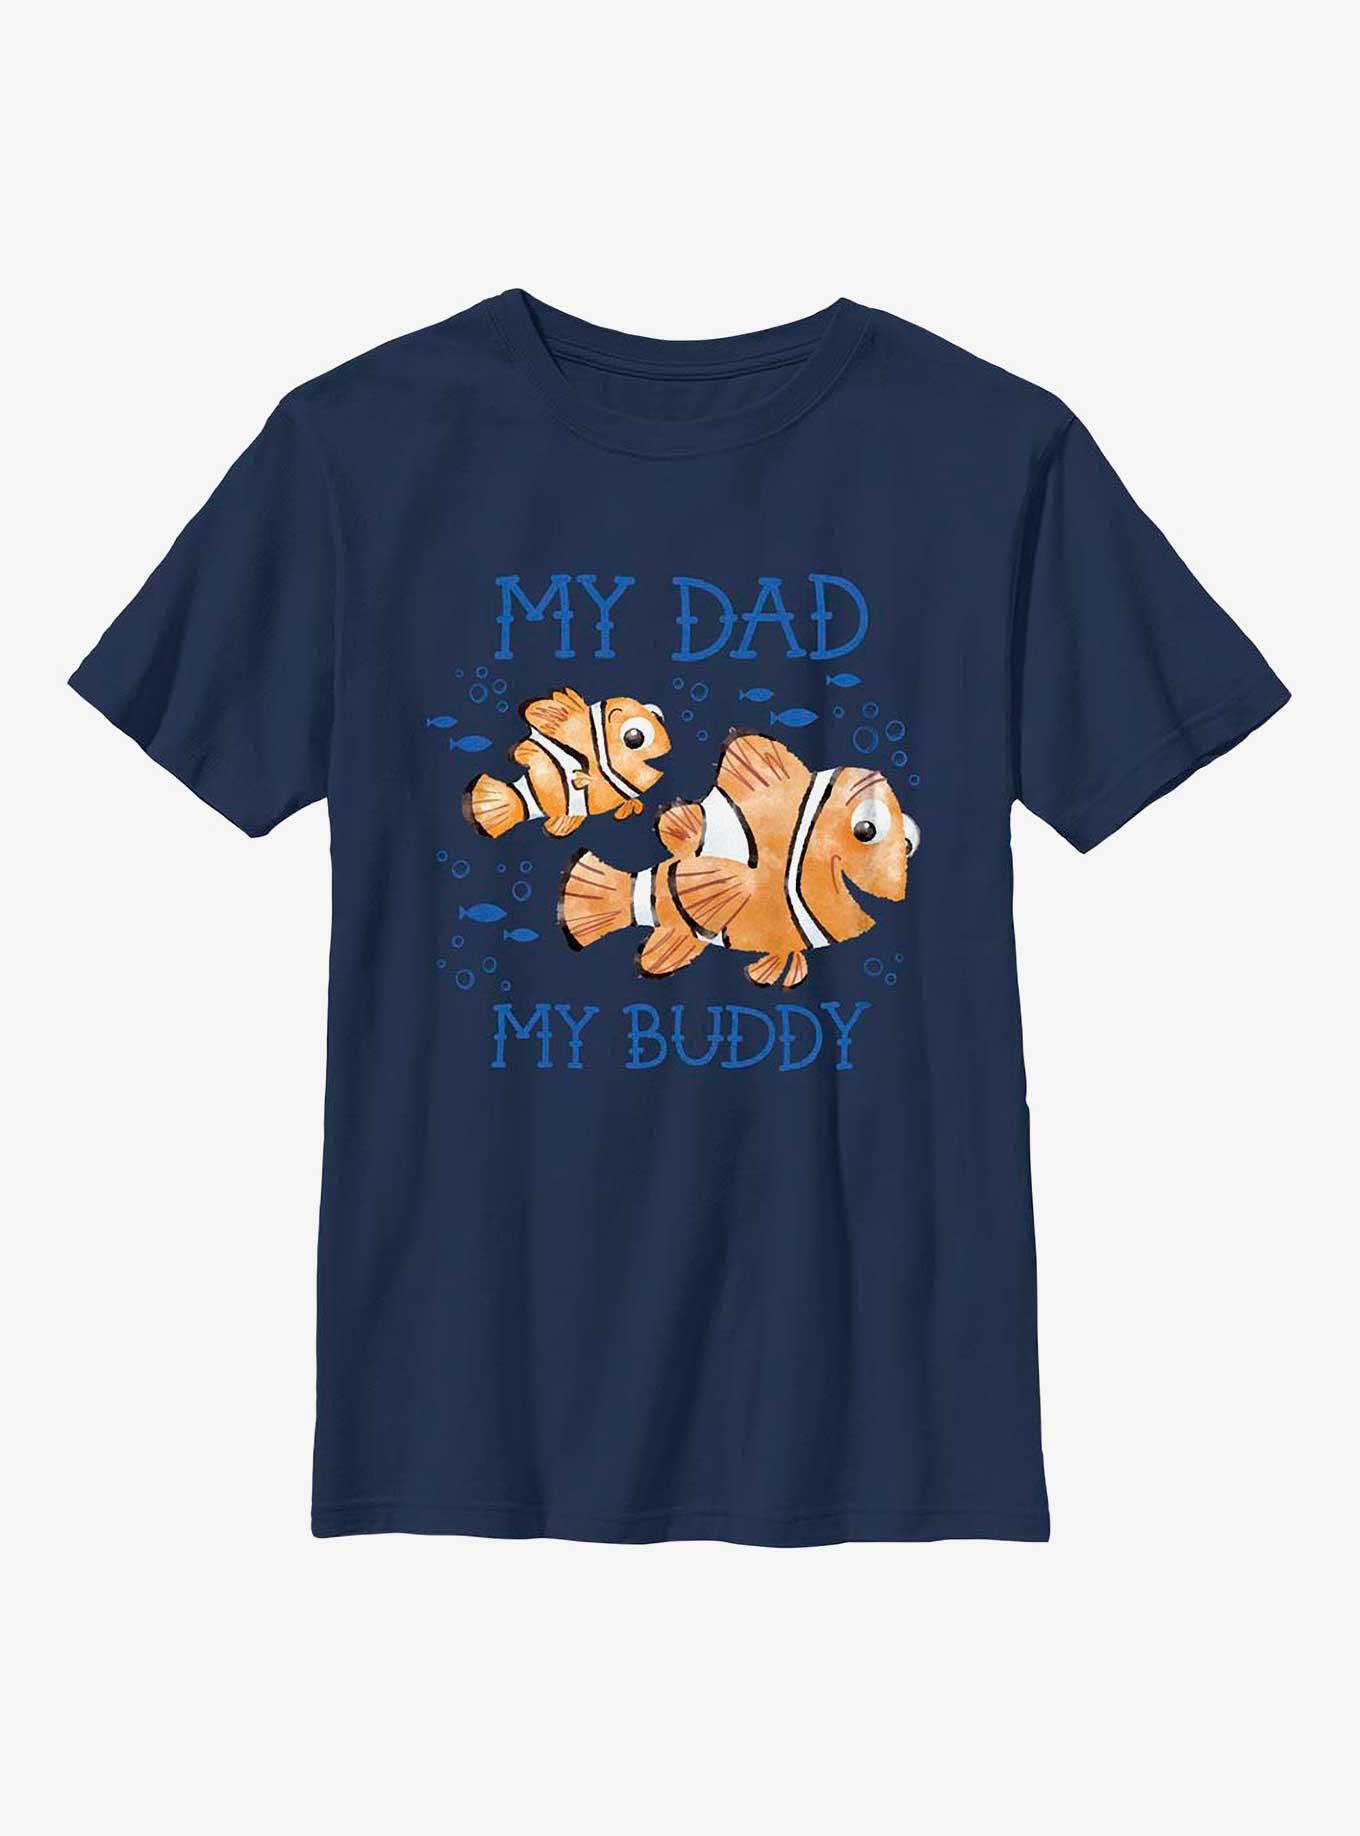 Disney Pixar Finding Nemo My Dad My Buddy Youth T-Shirt, NAVY, hi-res